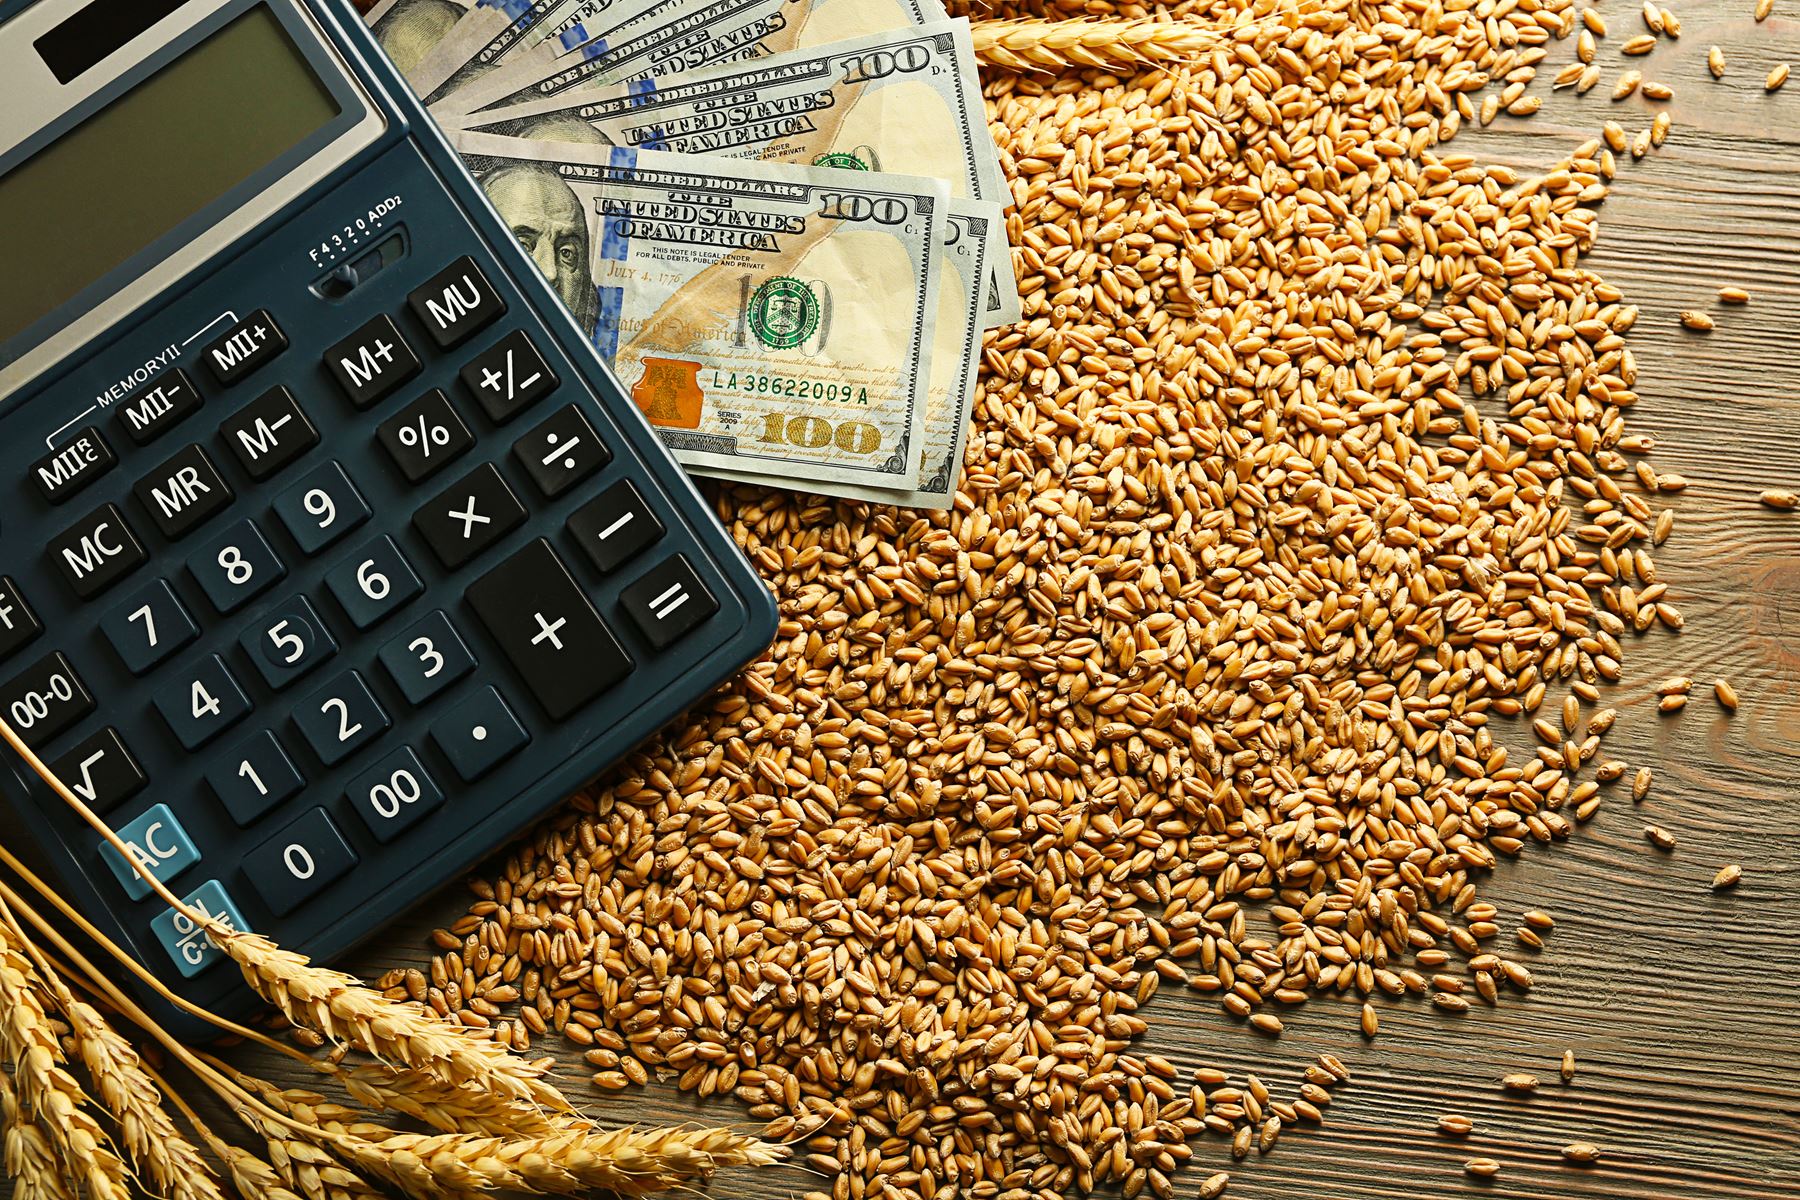 Calculator laying on 100 dollar bills and wheat kernels